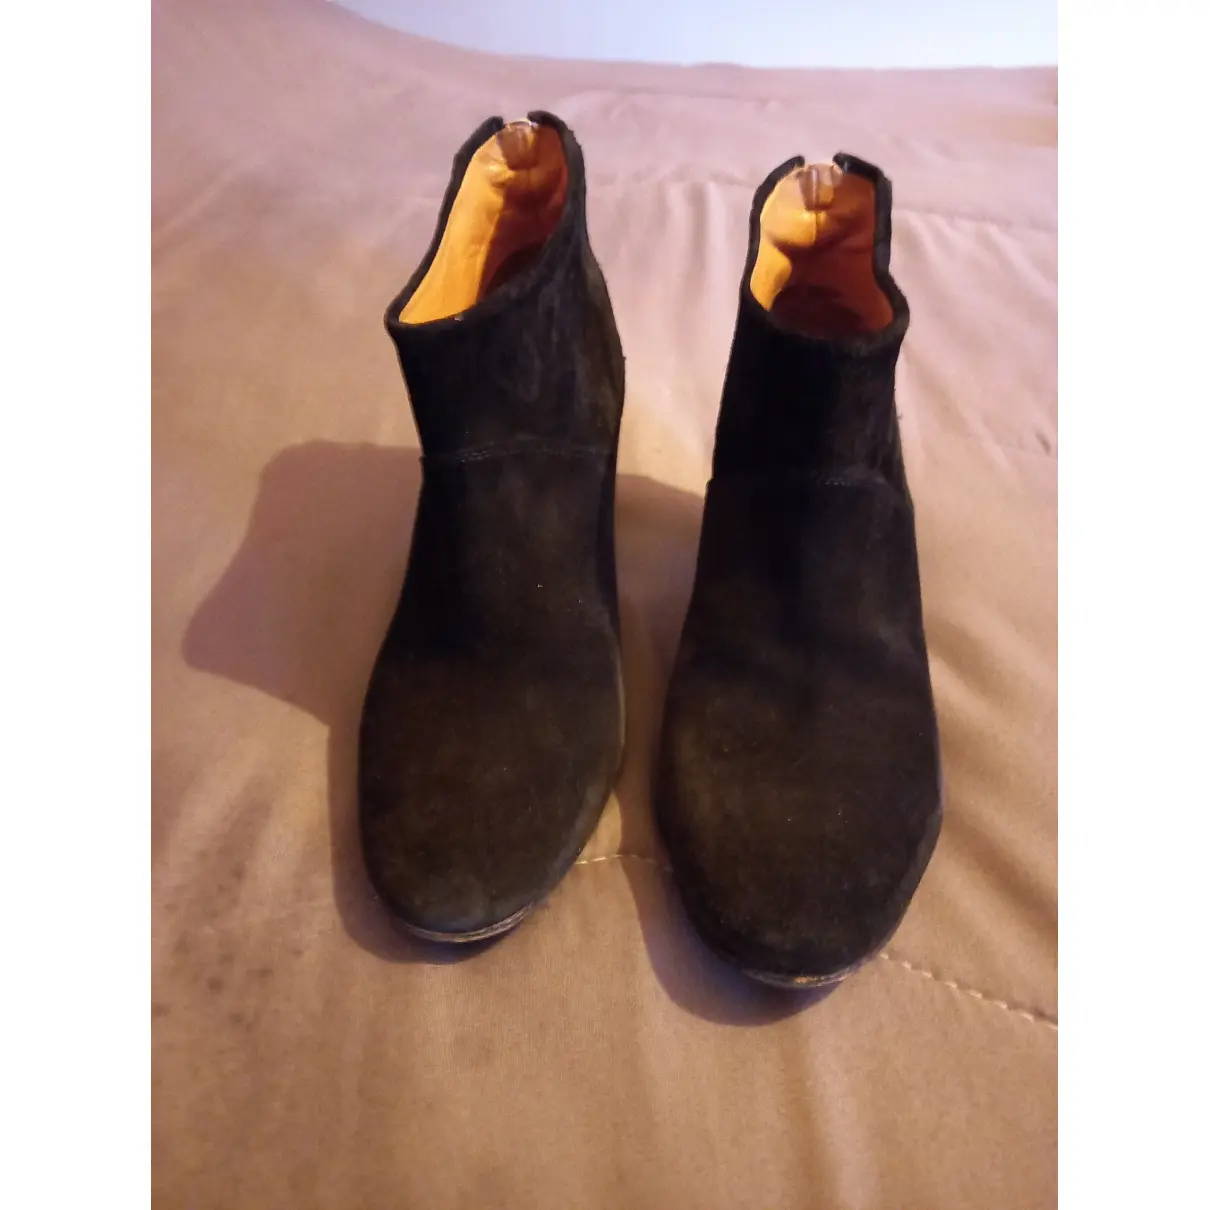 Buy Golden Goose Ankle boots online